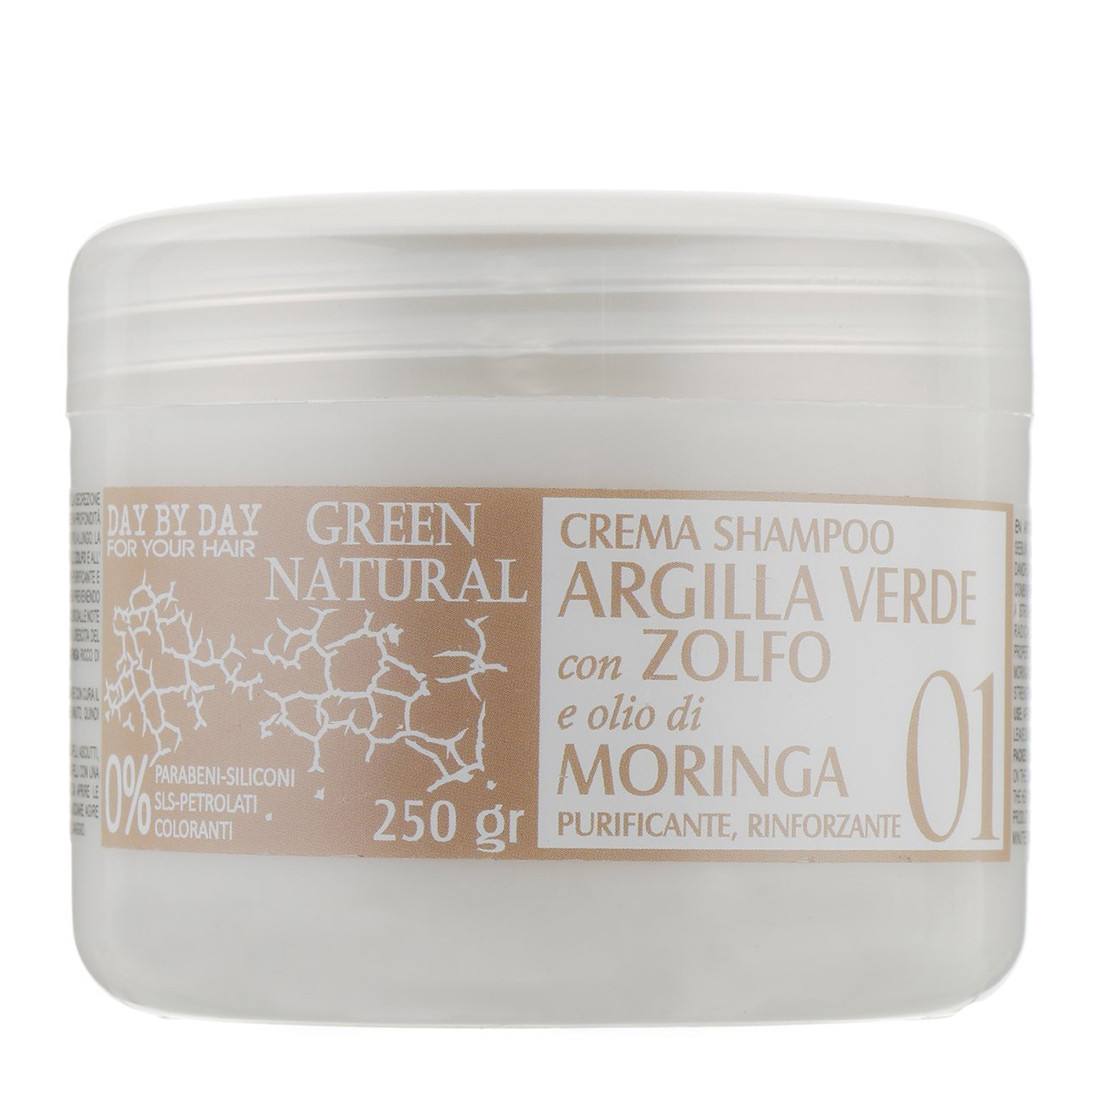 Крем-шампунь Alan Jey Green Natural Crema Shampoo Argilla Verde Con Zolfo E Olio Di Moringa